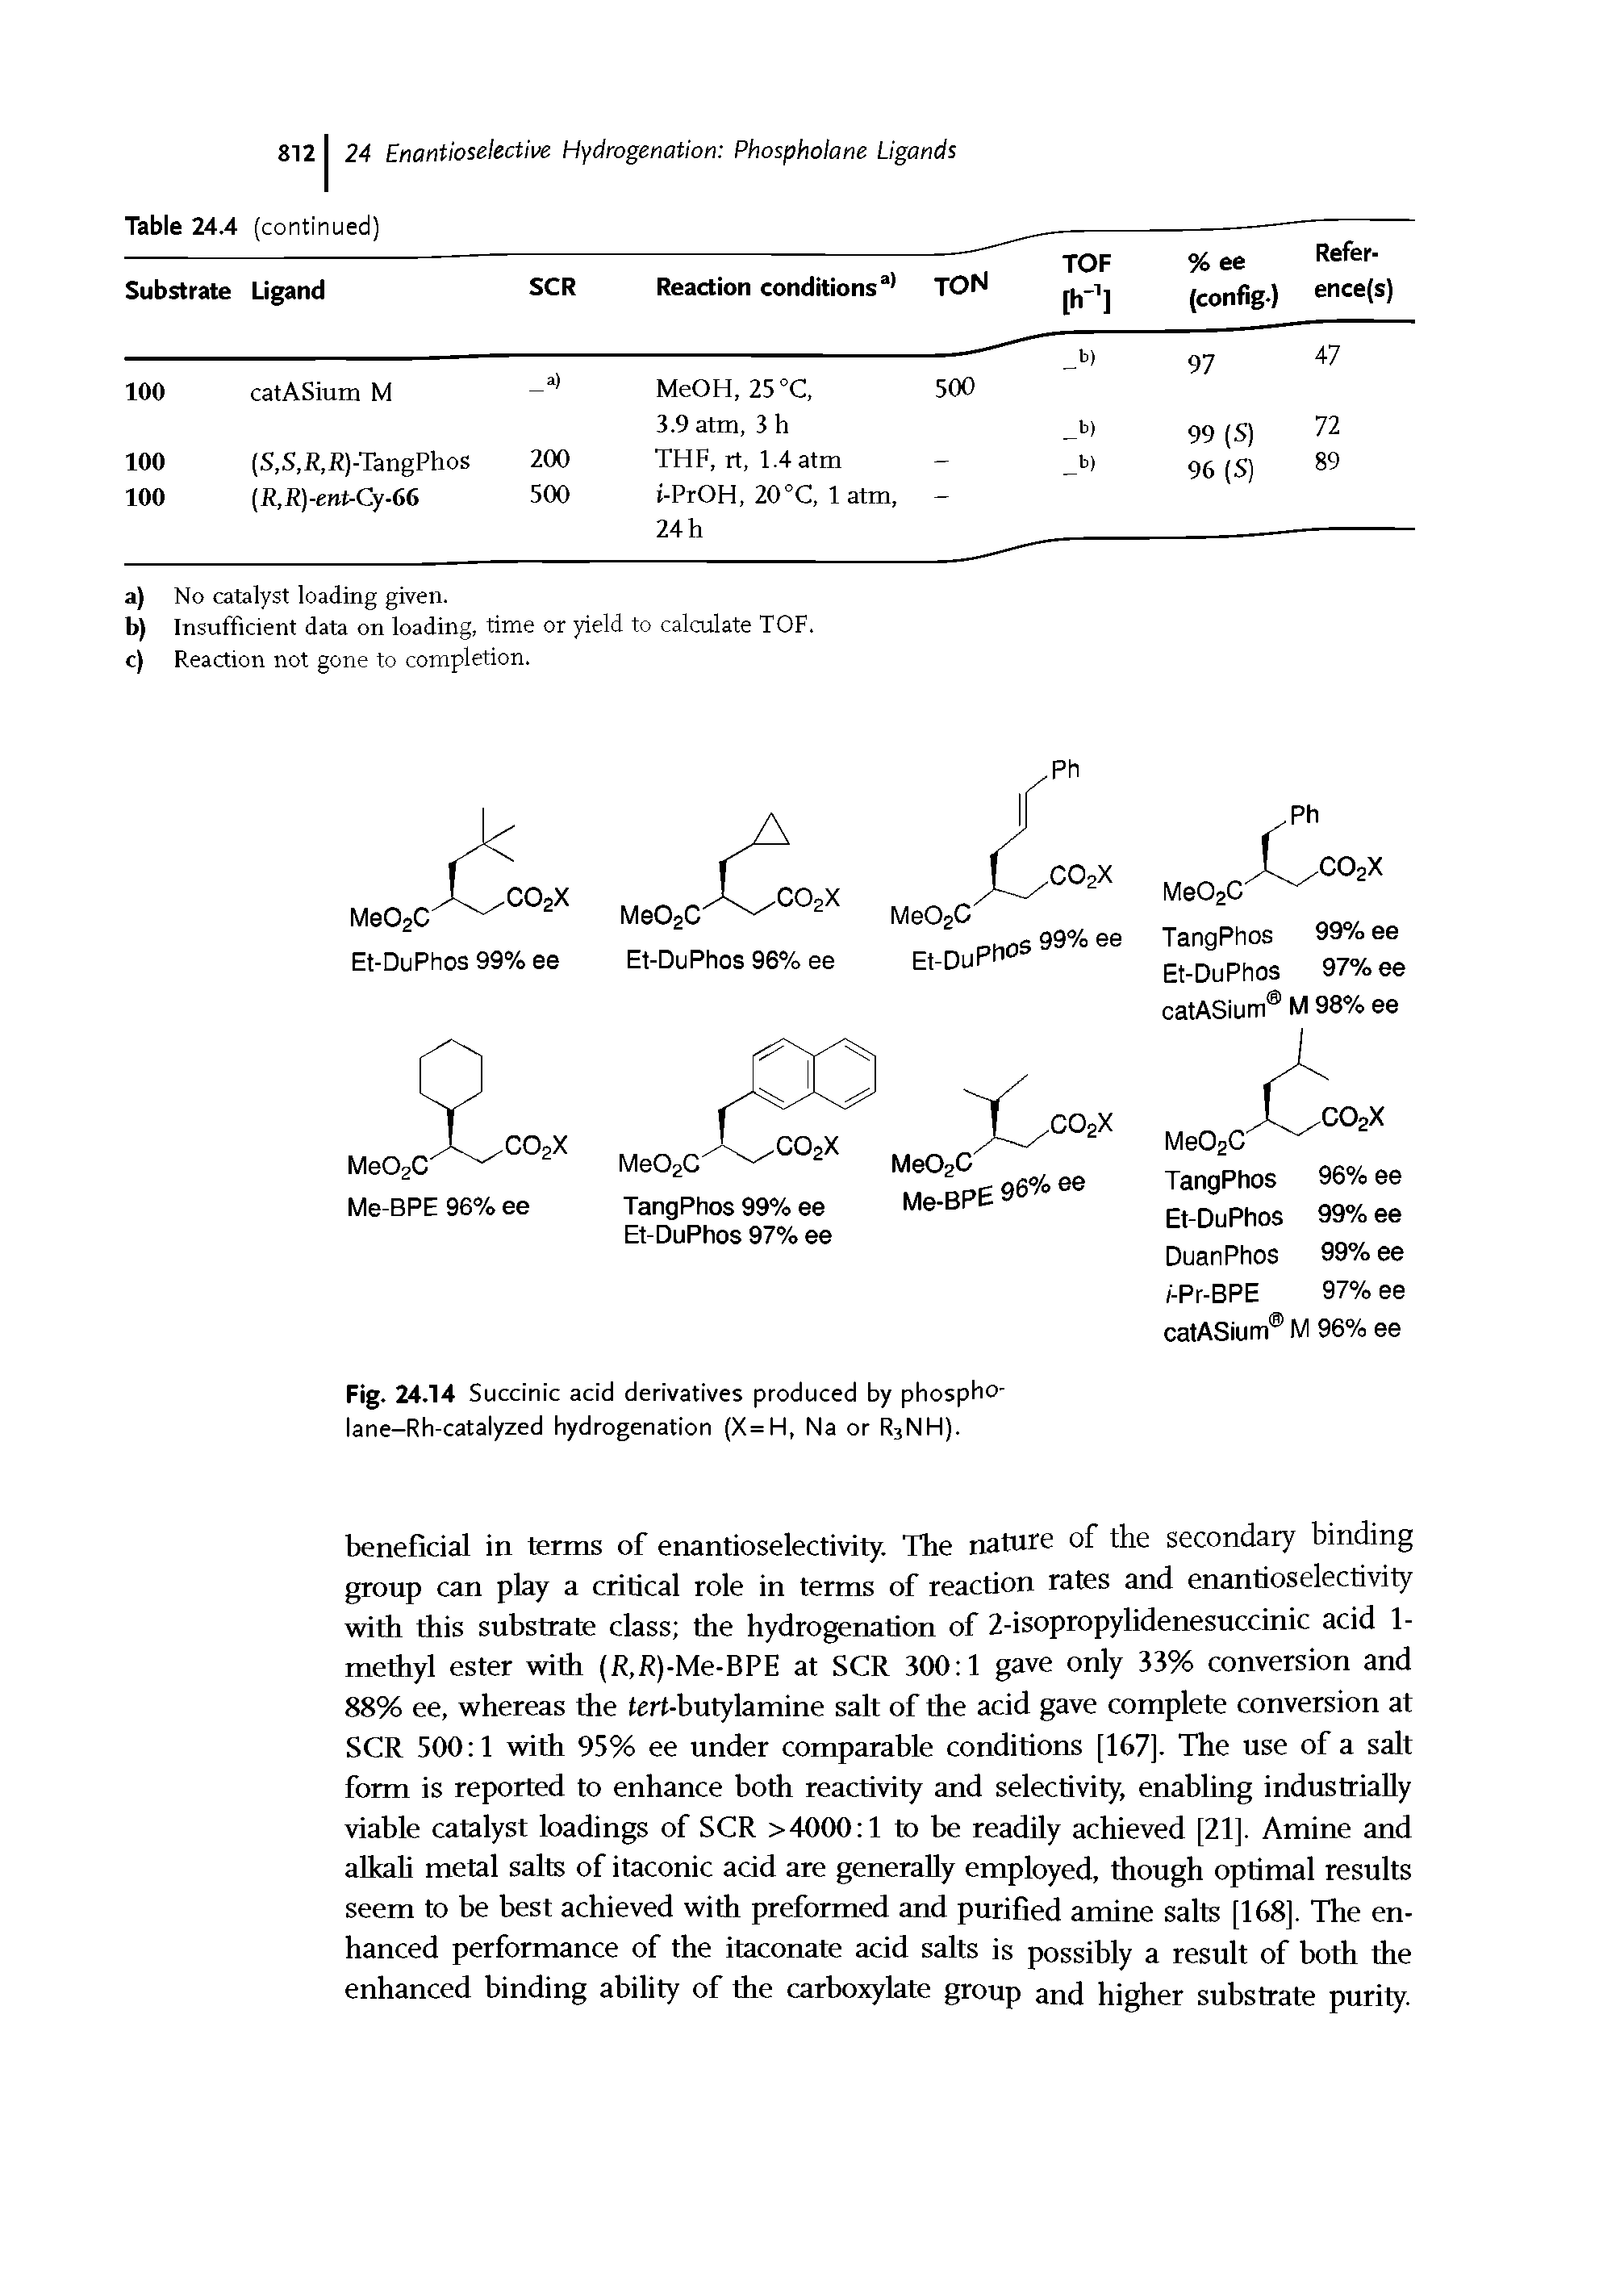 Fig. 24.14 Succinic acid derivatives produced by phospho-lane-Rh-catalyzed hydrogenation (X=H, Na or R3NH).